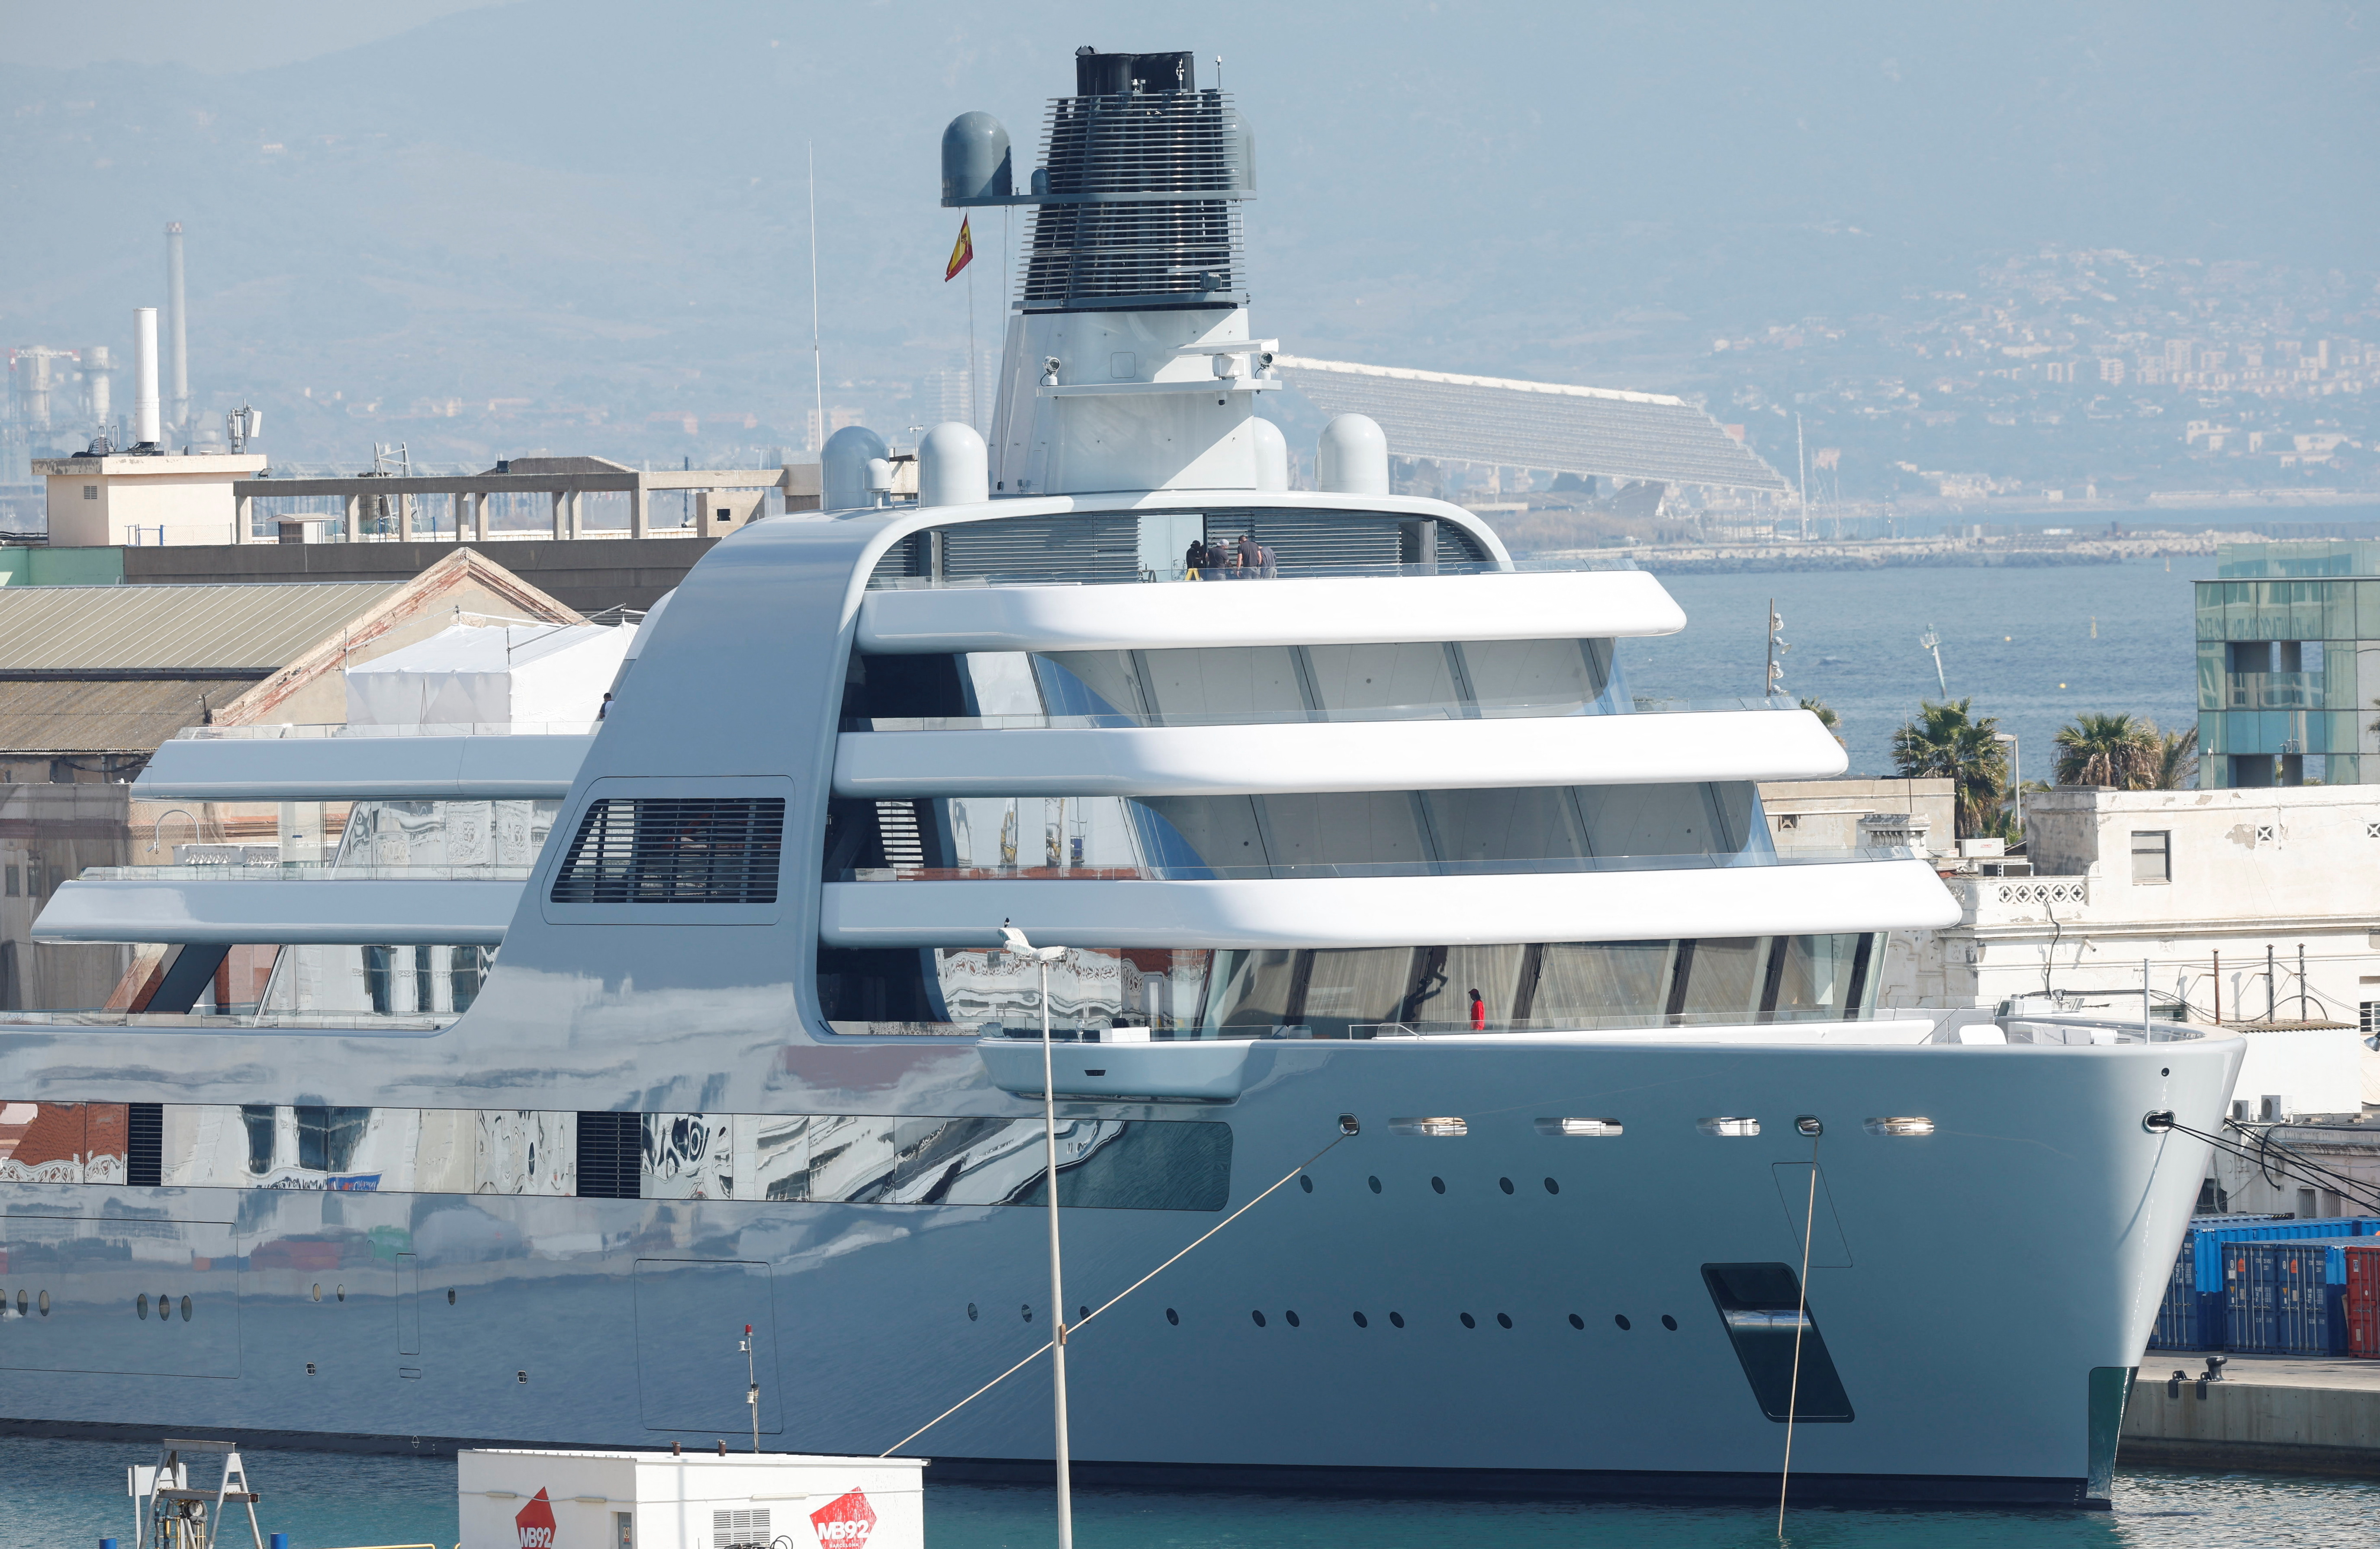 Roman Abramovich's super yacht Solaris is seen at Barcelona Port